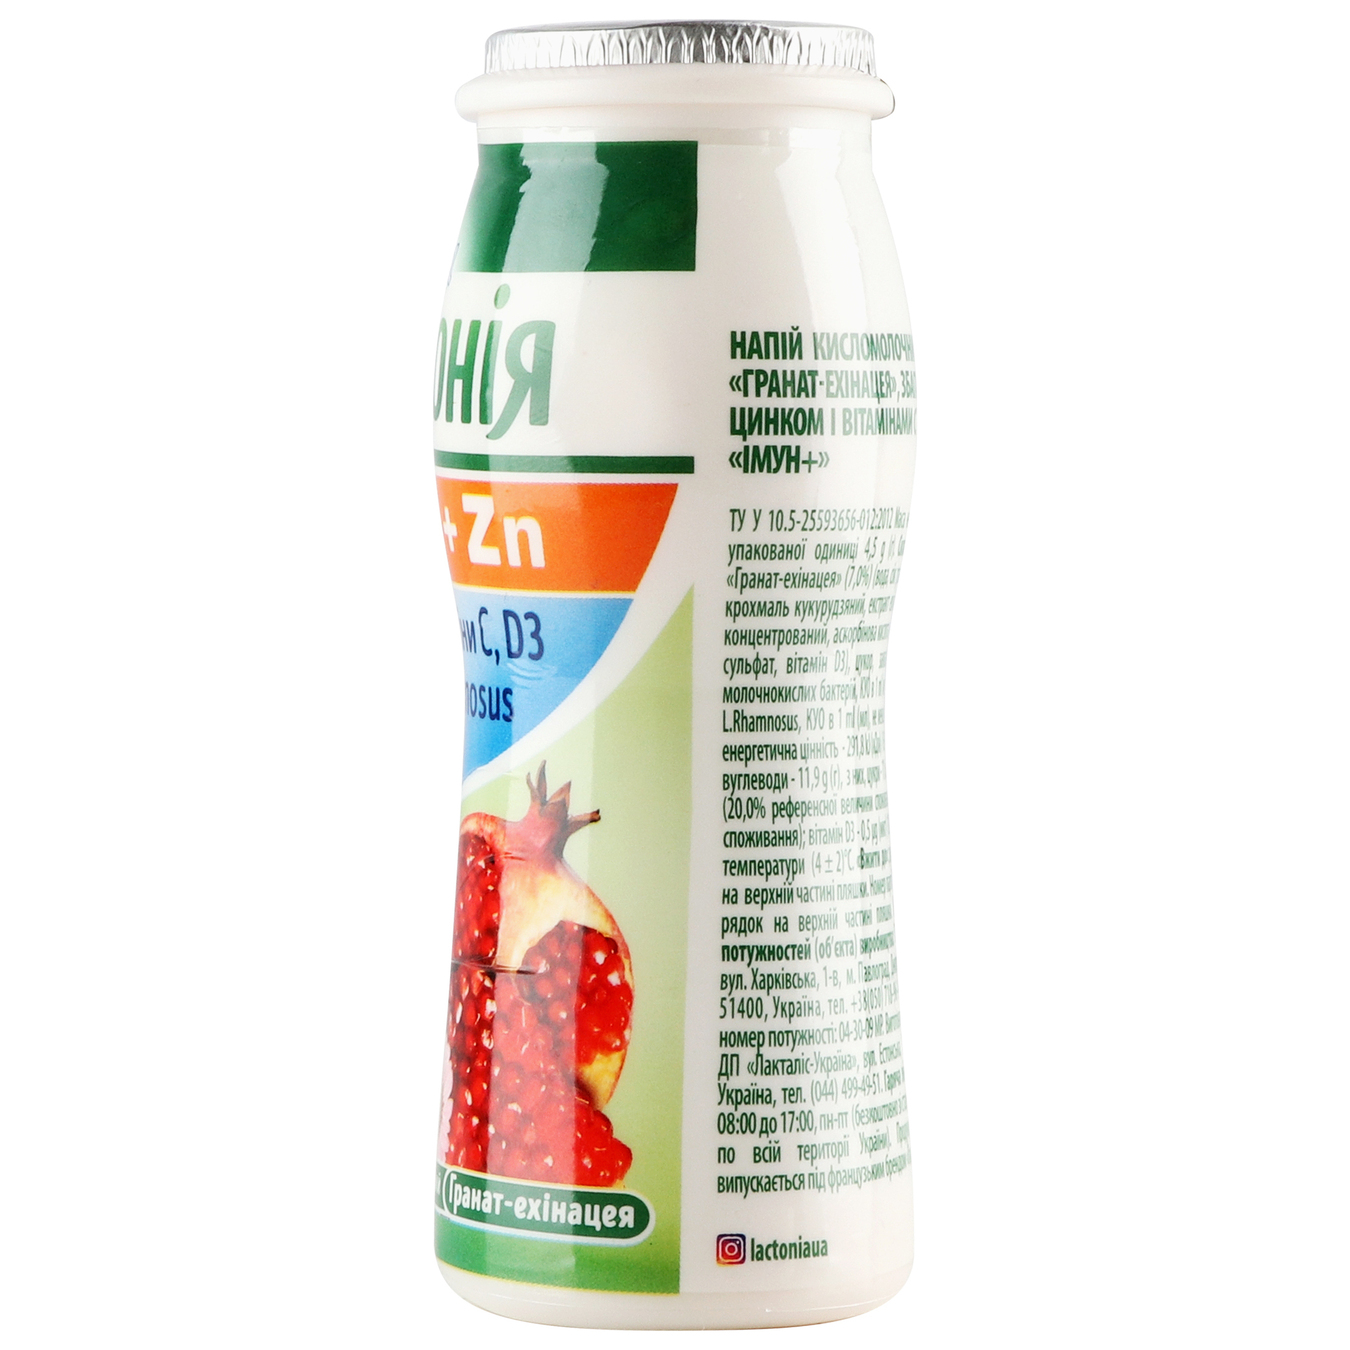 Drink Lactonia sour milk yogurt Imun + pomegranate-echinacea 1.5% 100g bottle 4